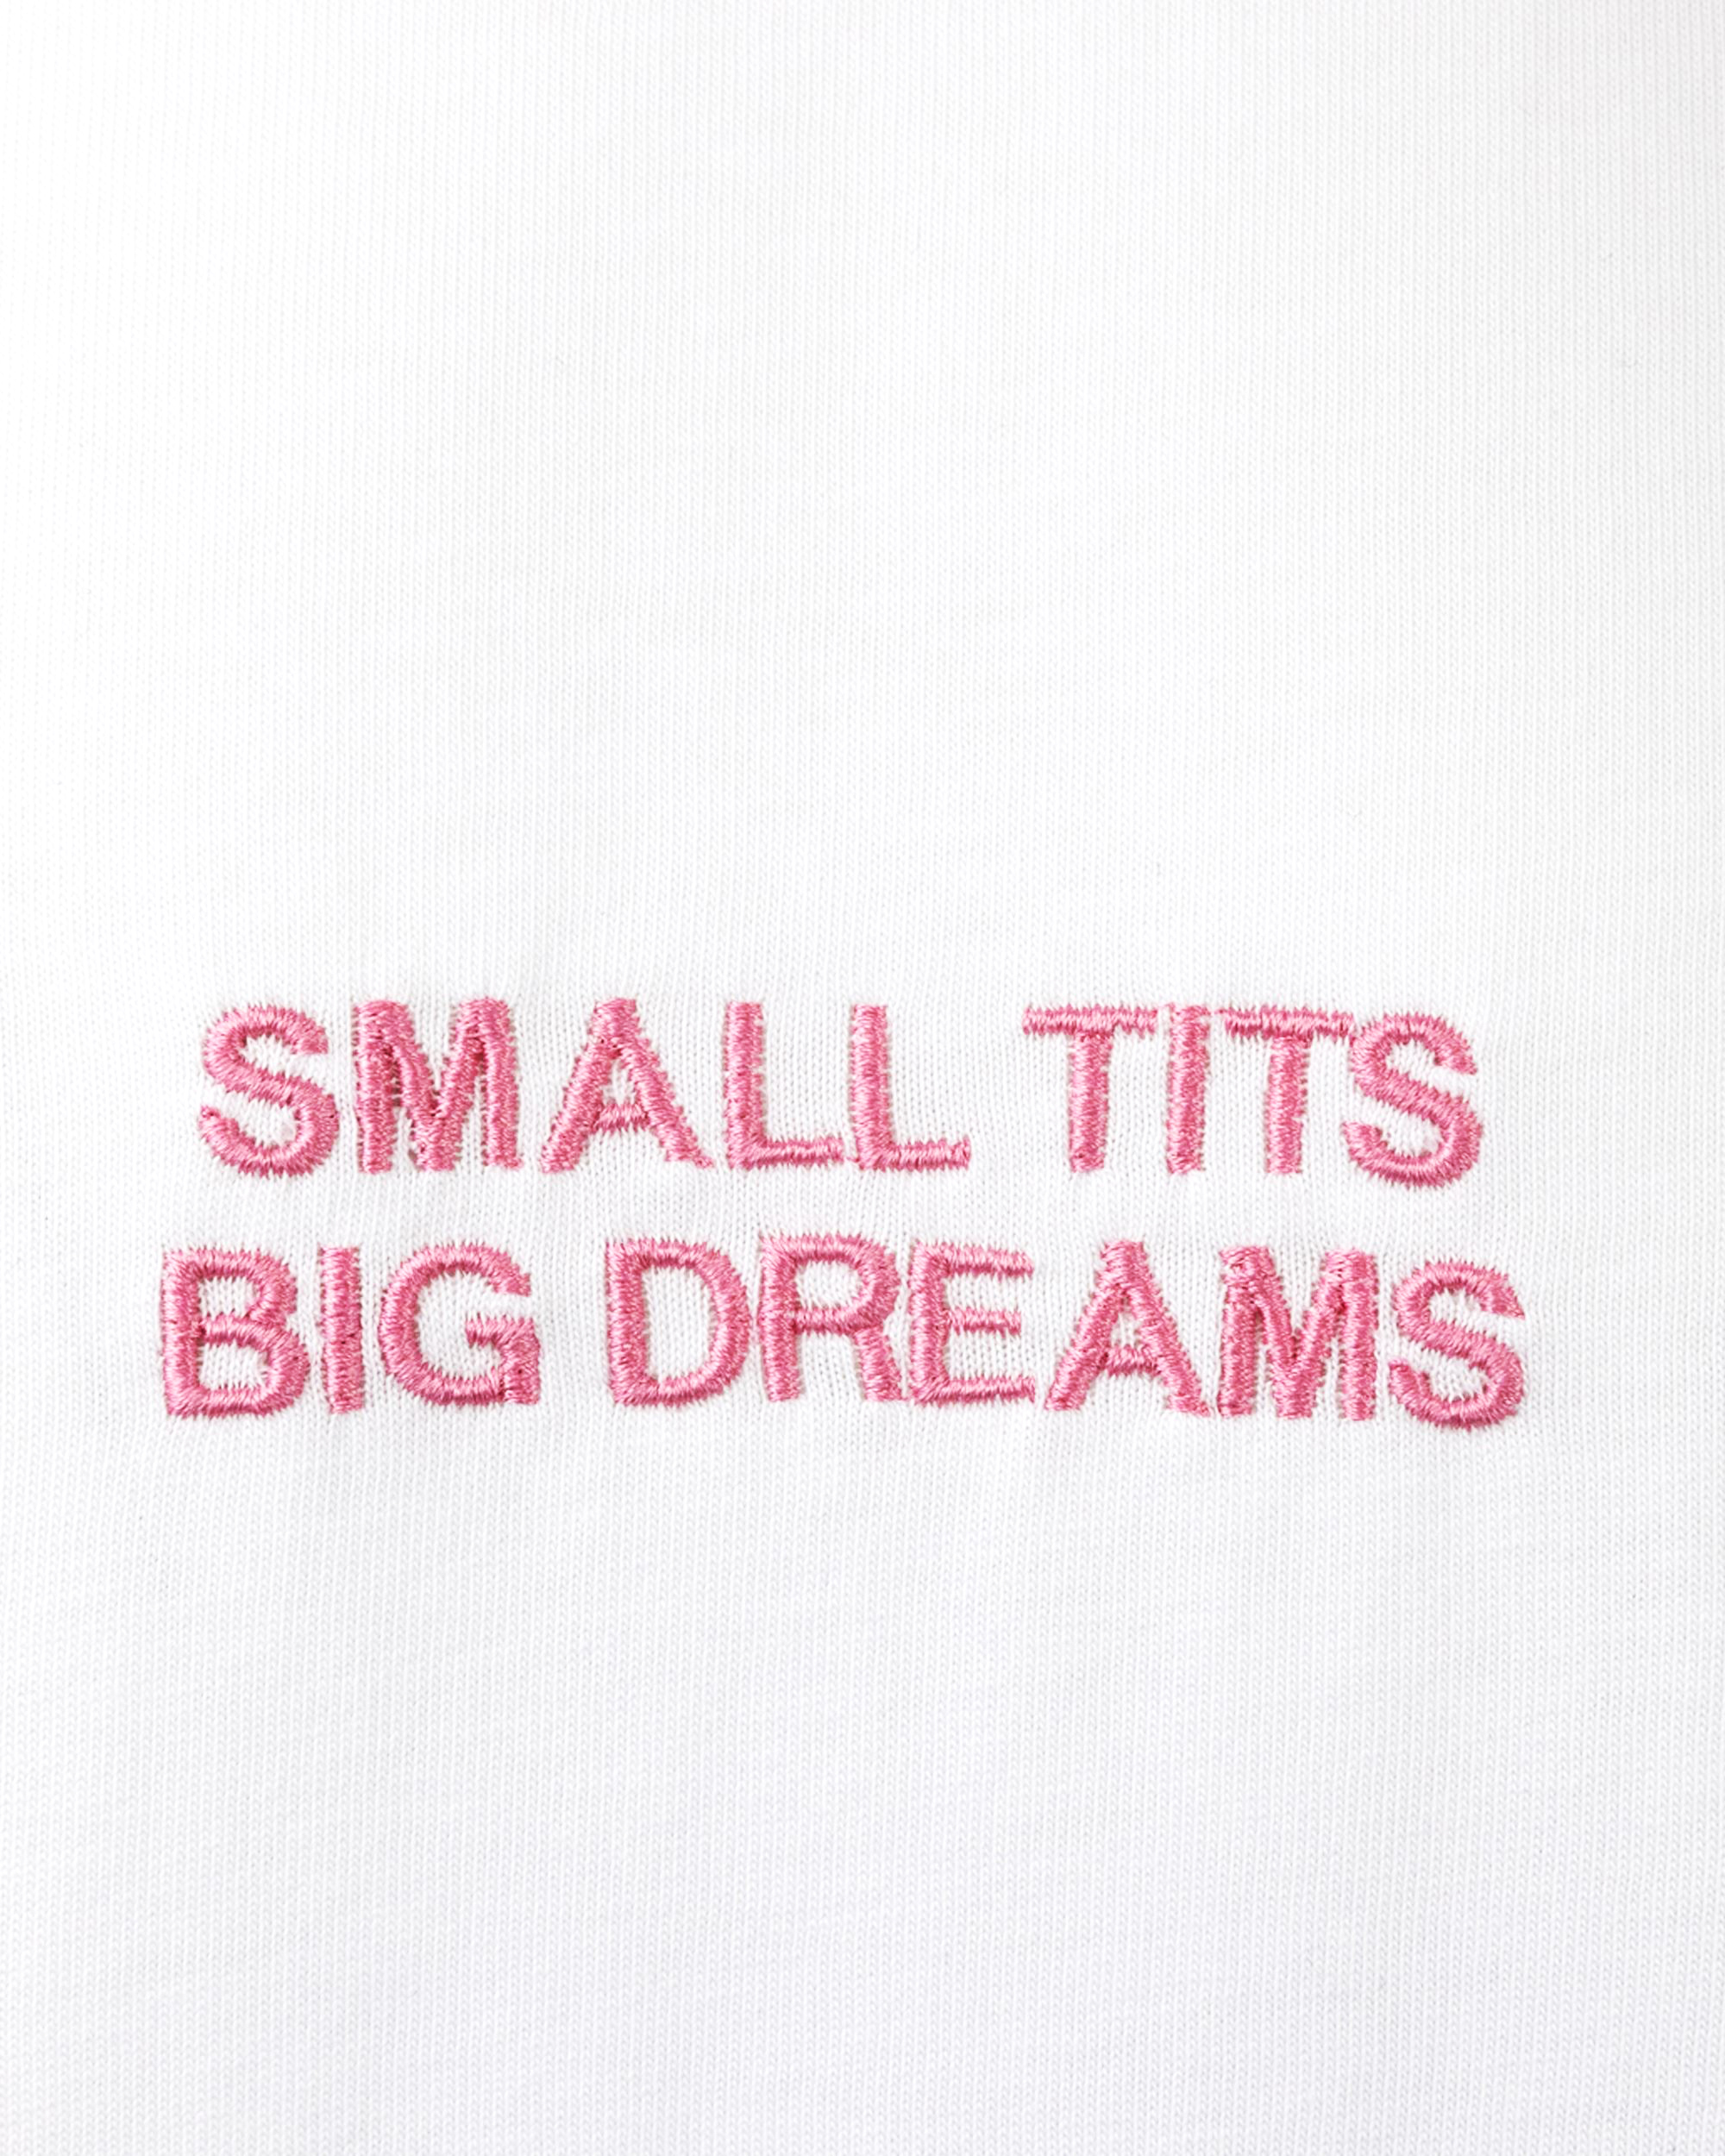 Shop Encré. Small Tits Big Dreams In White